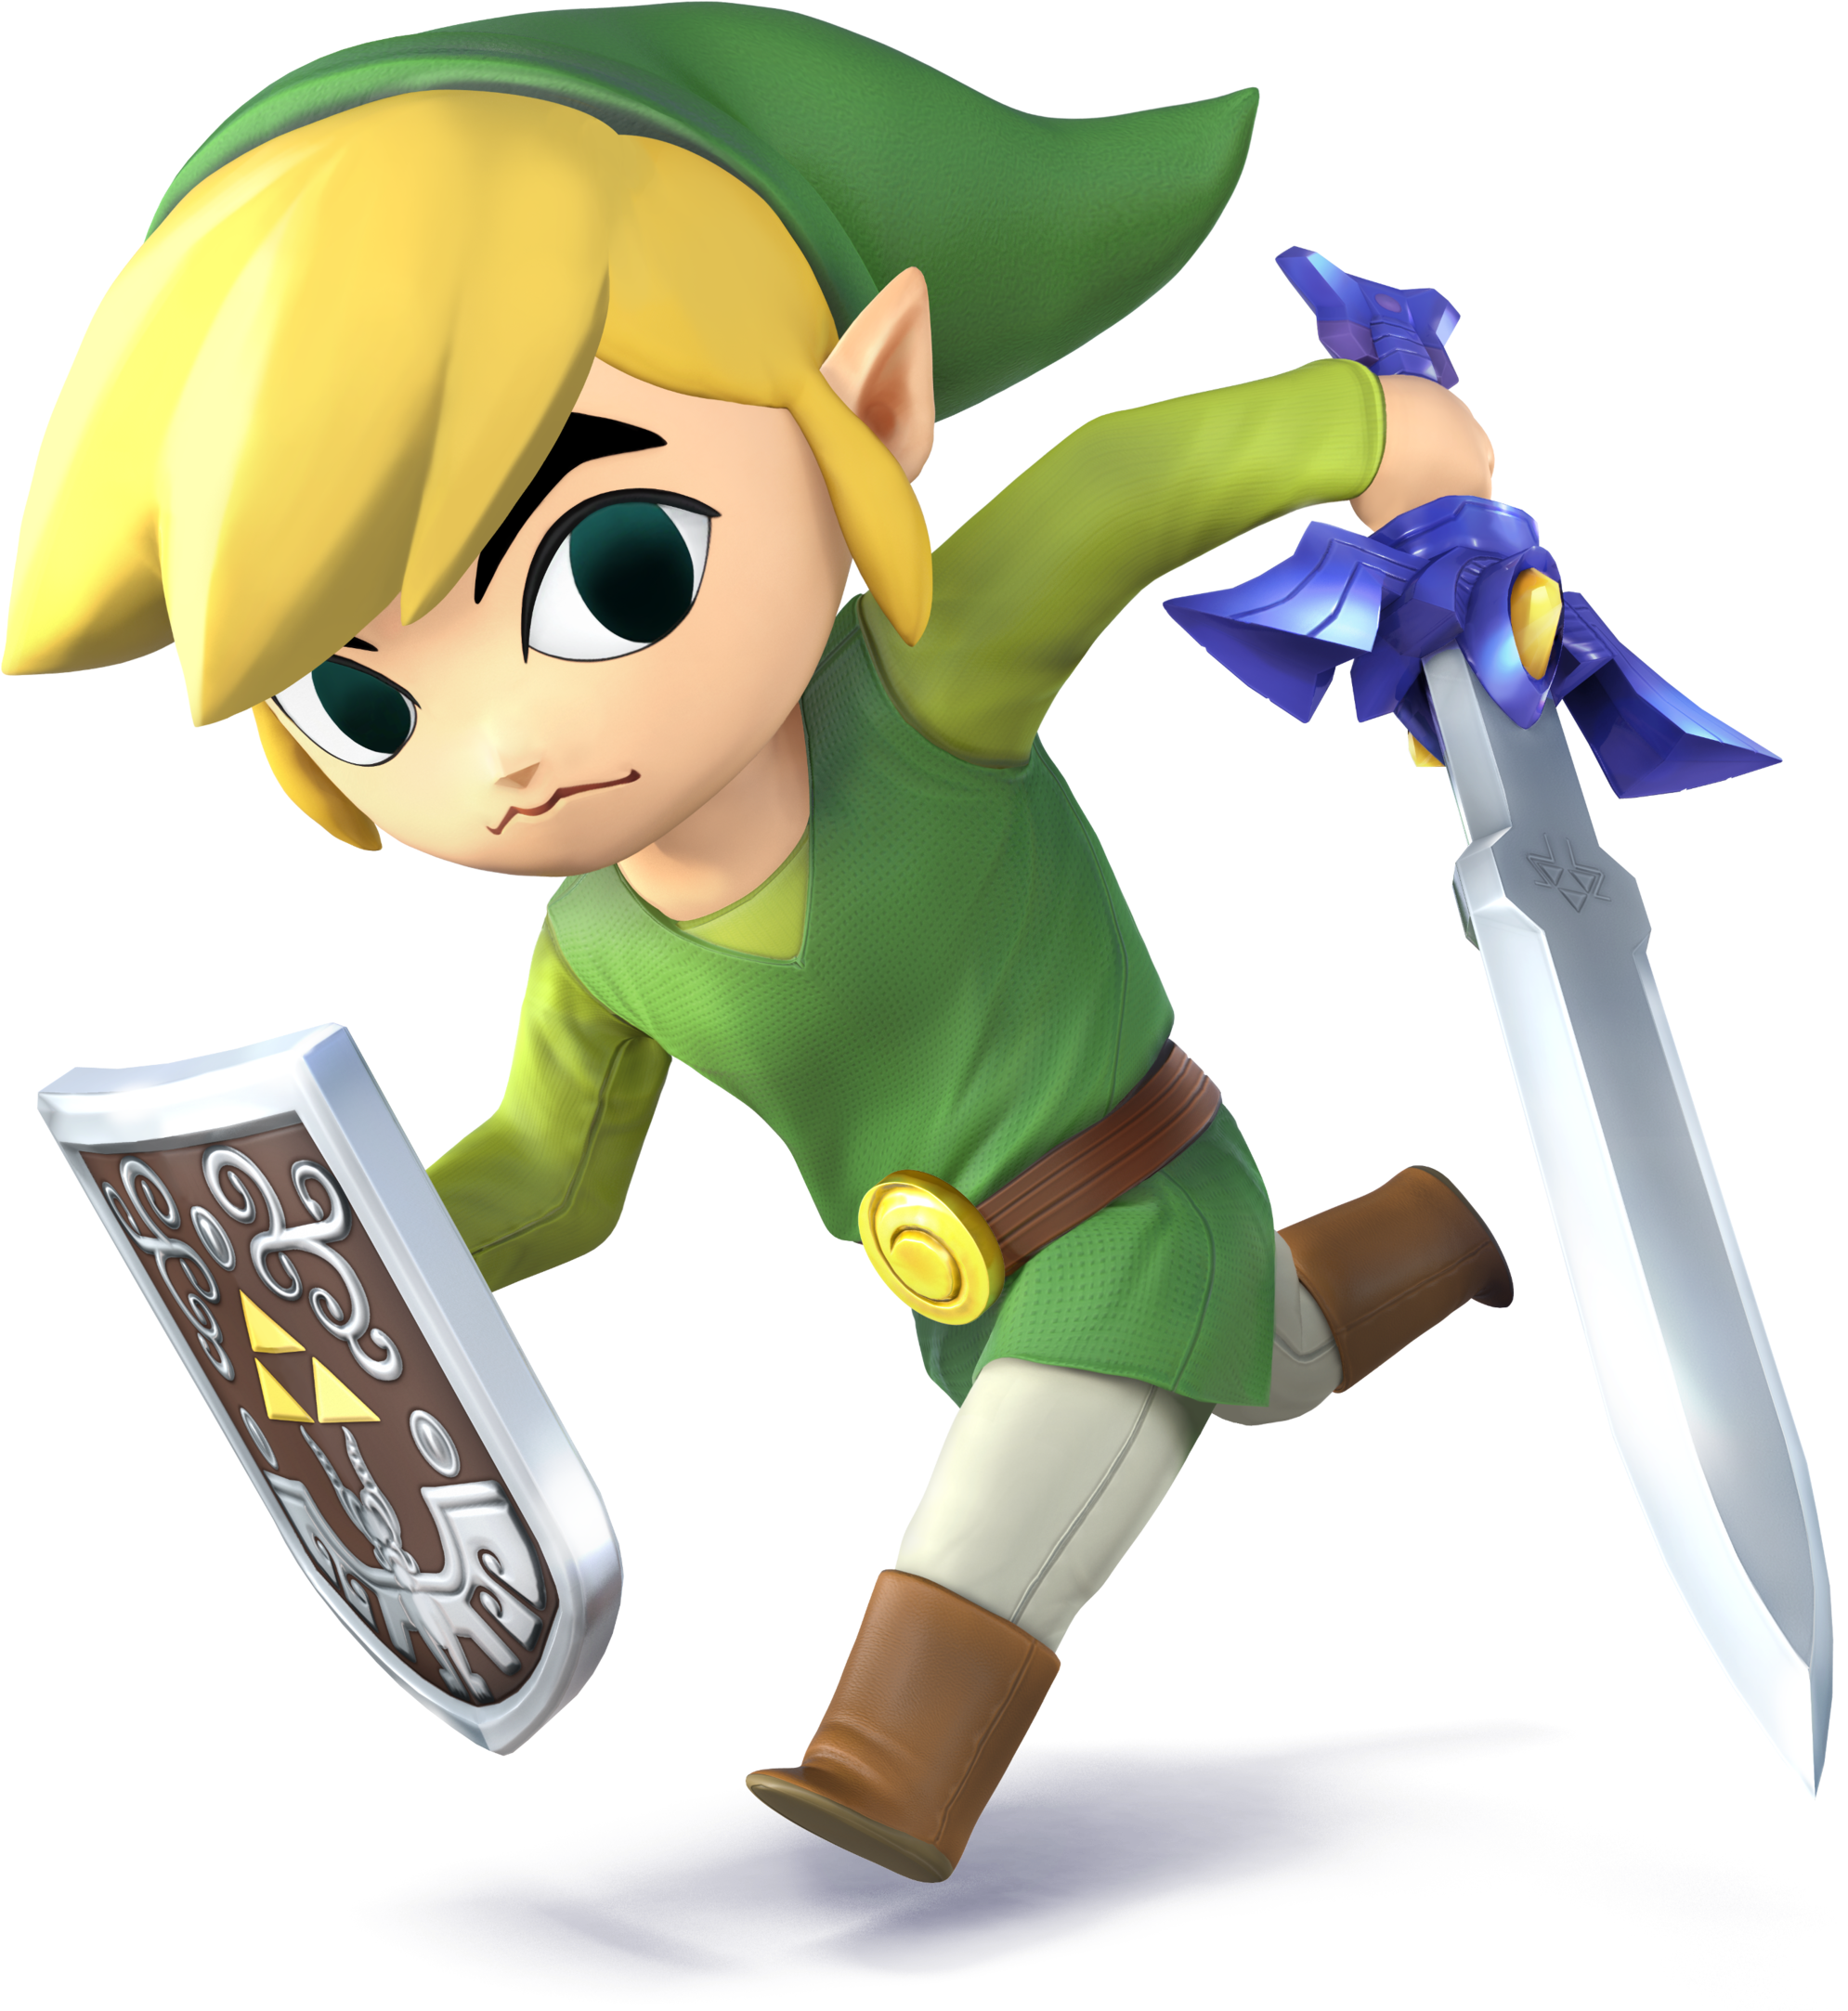 Toon Link Artwork - Super Smash Bros Wii U Toon Link (2000x2165)